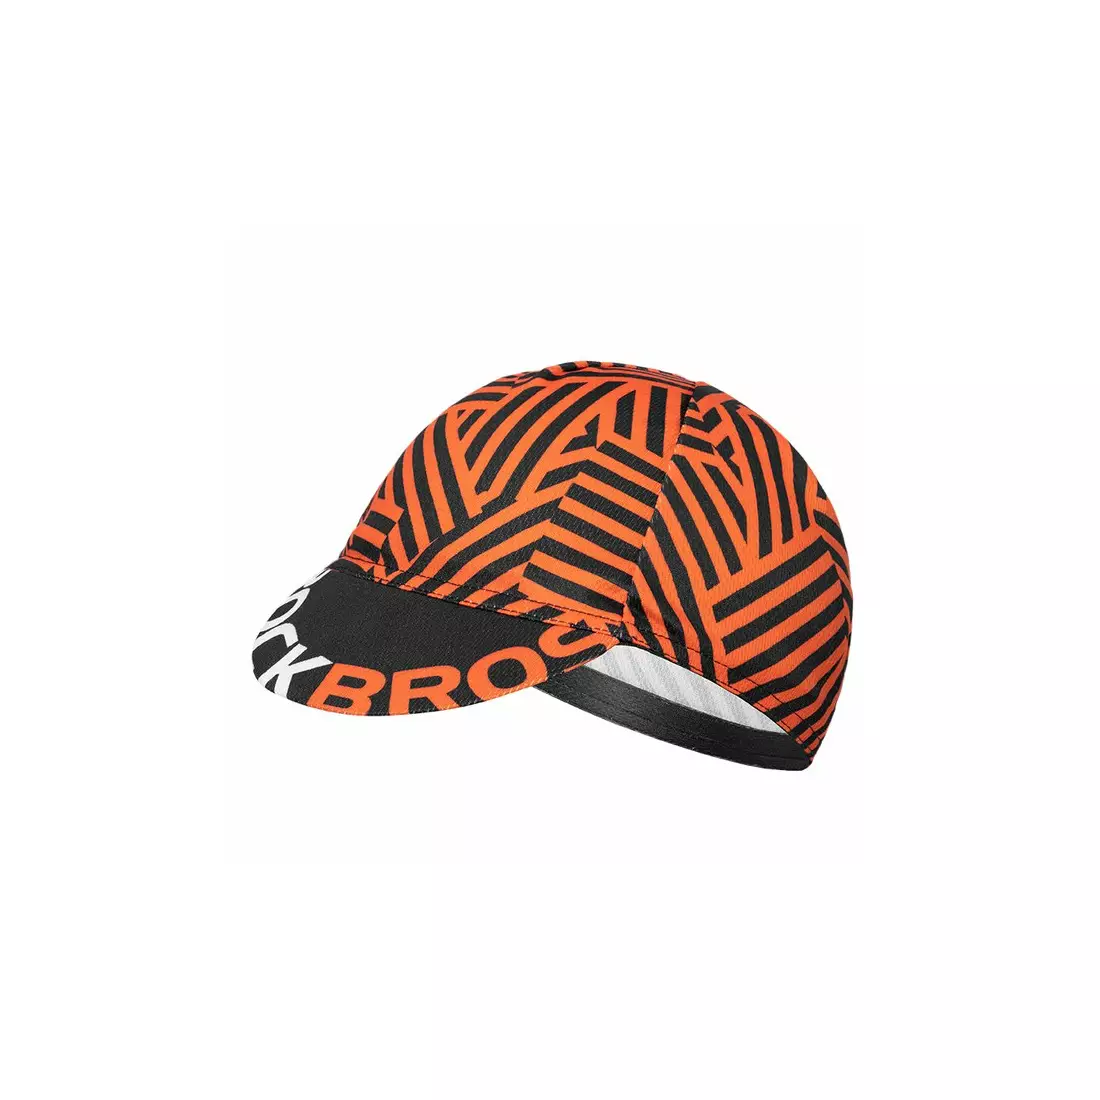 Rockbros Fahrradkappe, Orange MZ10017